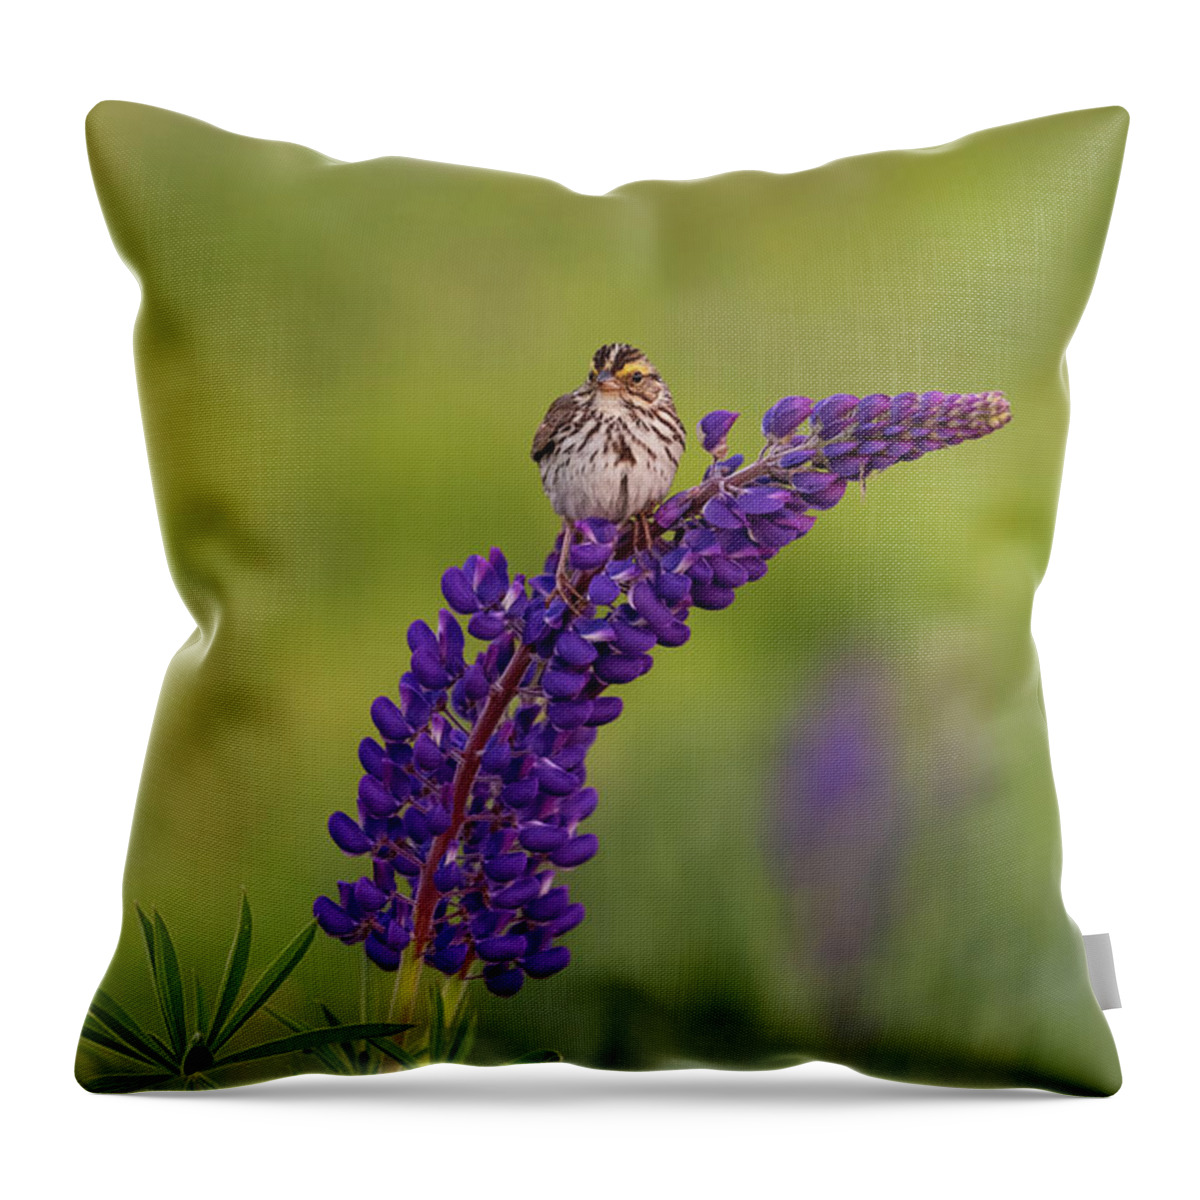 Savannah Sparrow Throw Pillow featuring the photograph Savannah Sparrow by Rob Davies